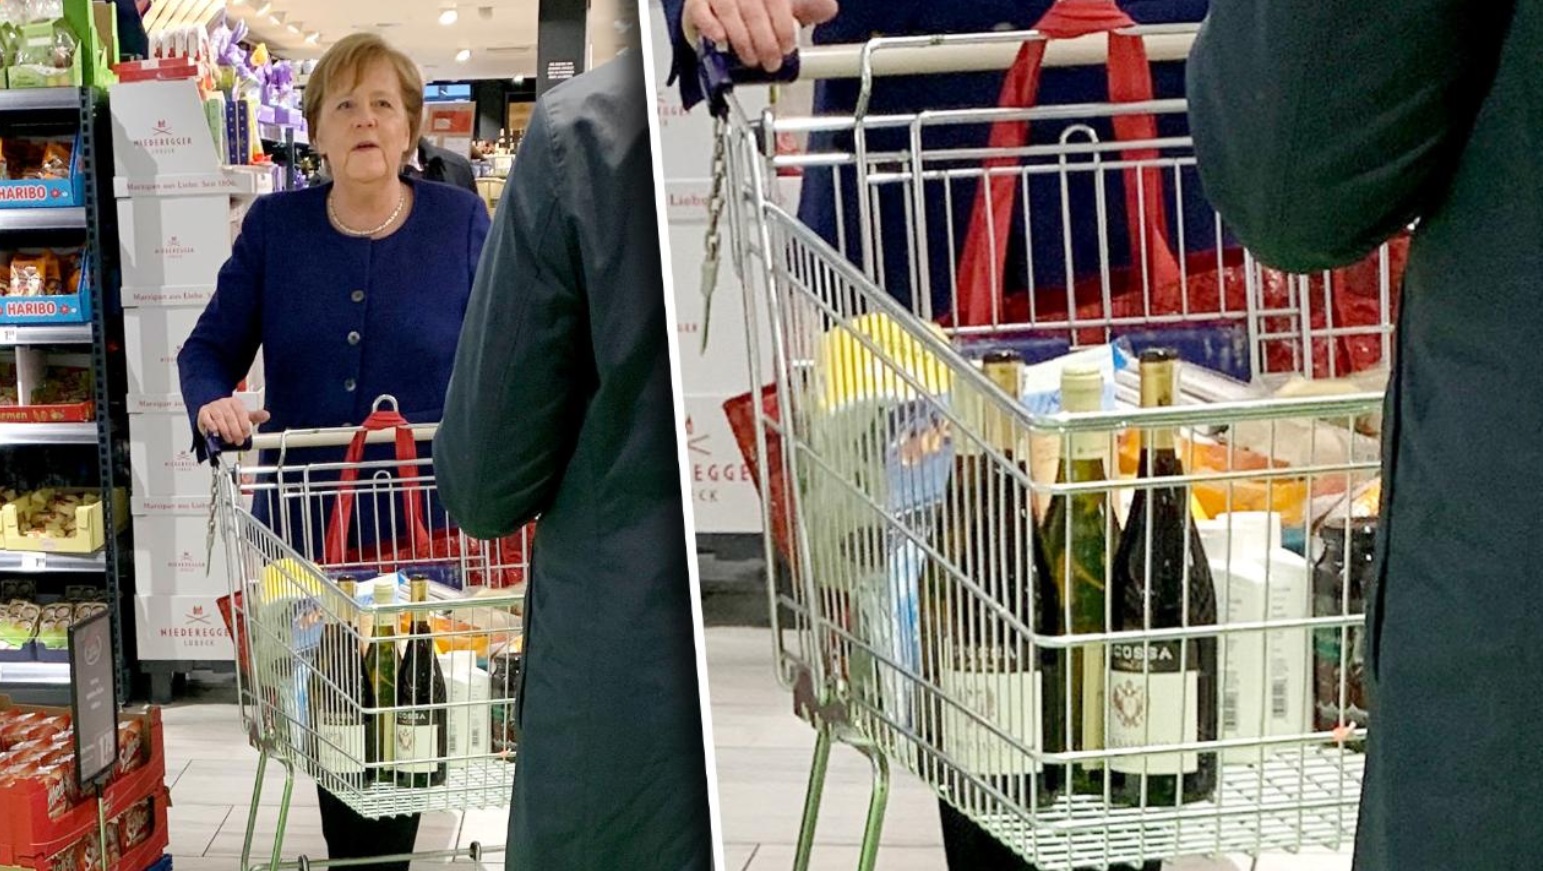 PHOTO Angela Merkel Stocking Up On Wine At Grocery Store Before Going Into Quarantine